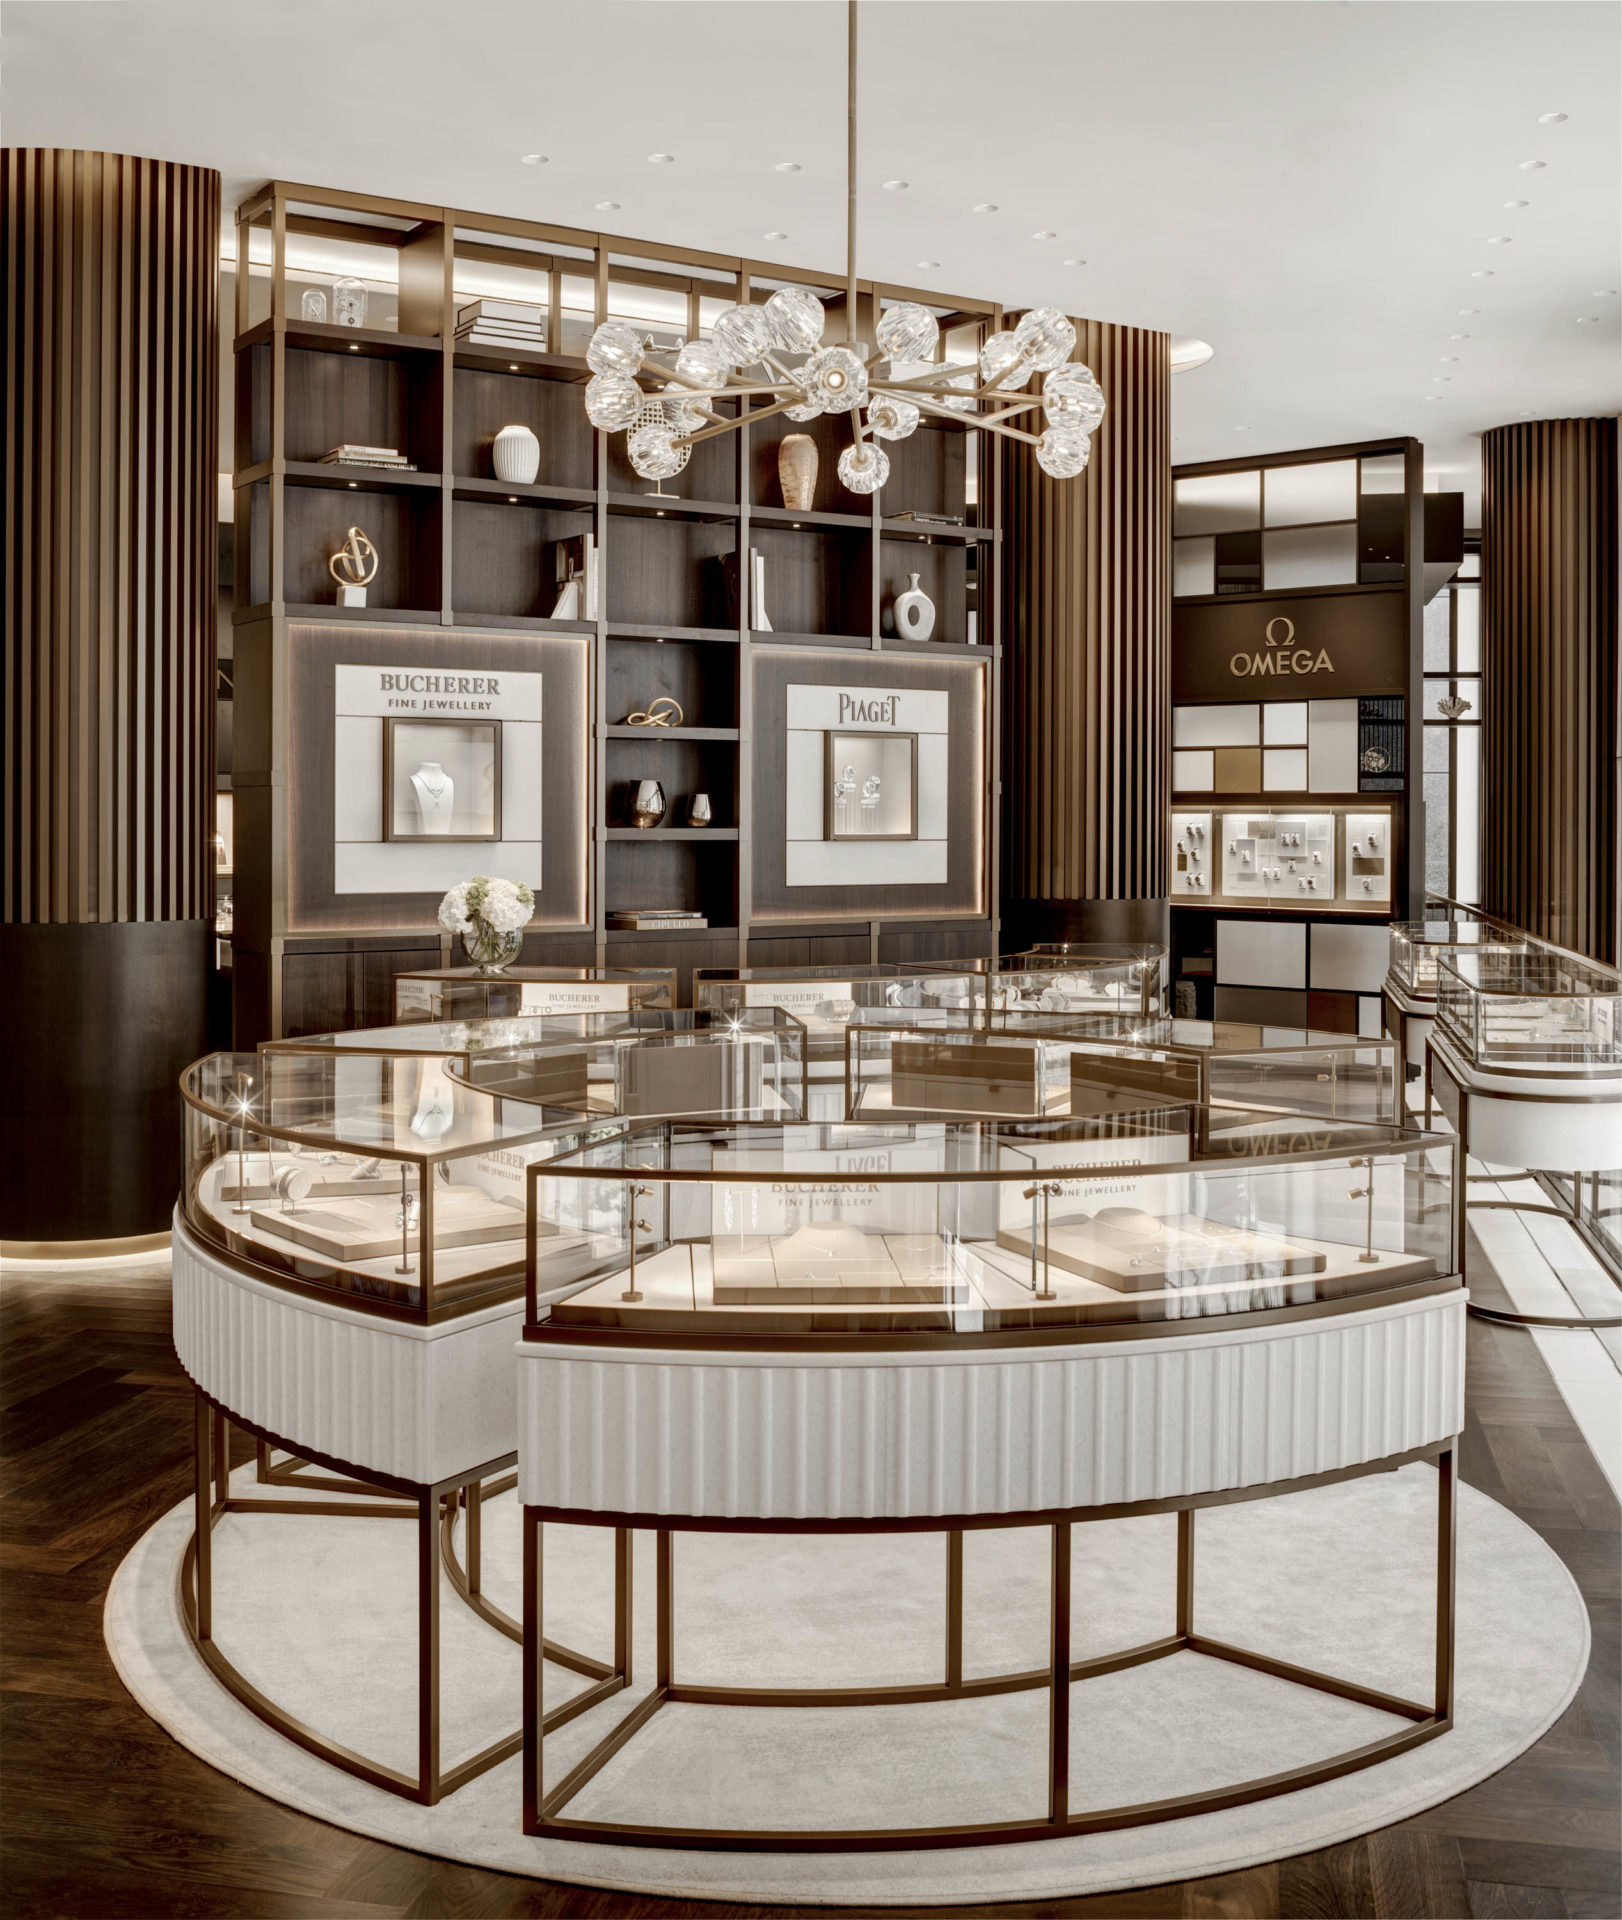 Bucherer Opened The Biggest Luxury Watch Store In The U.S. - V Magazine